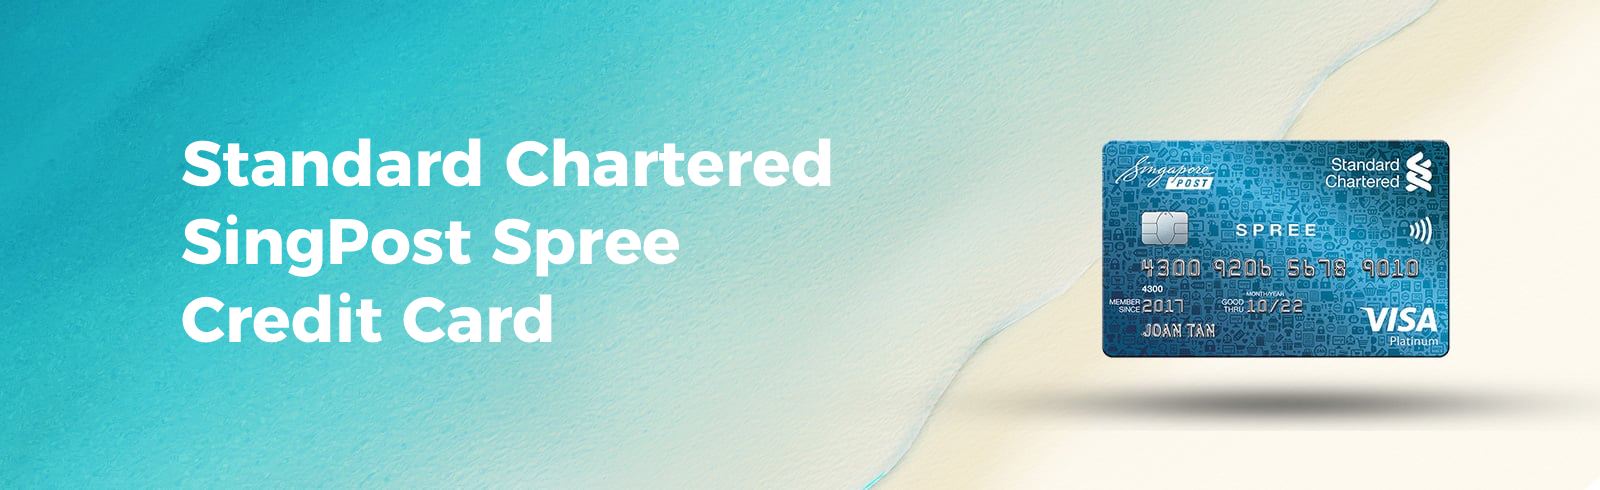 Standard Chartered NEW SingPost Spree Card | 2018